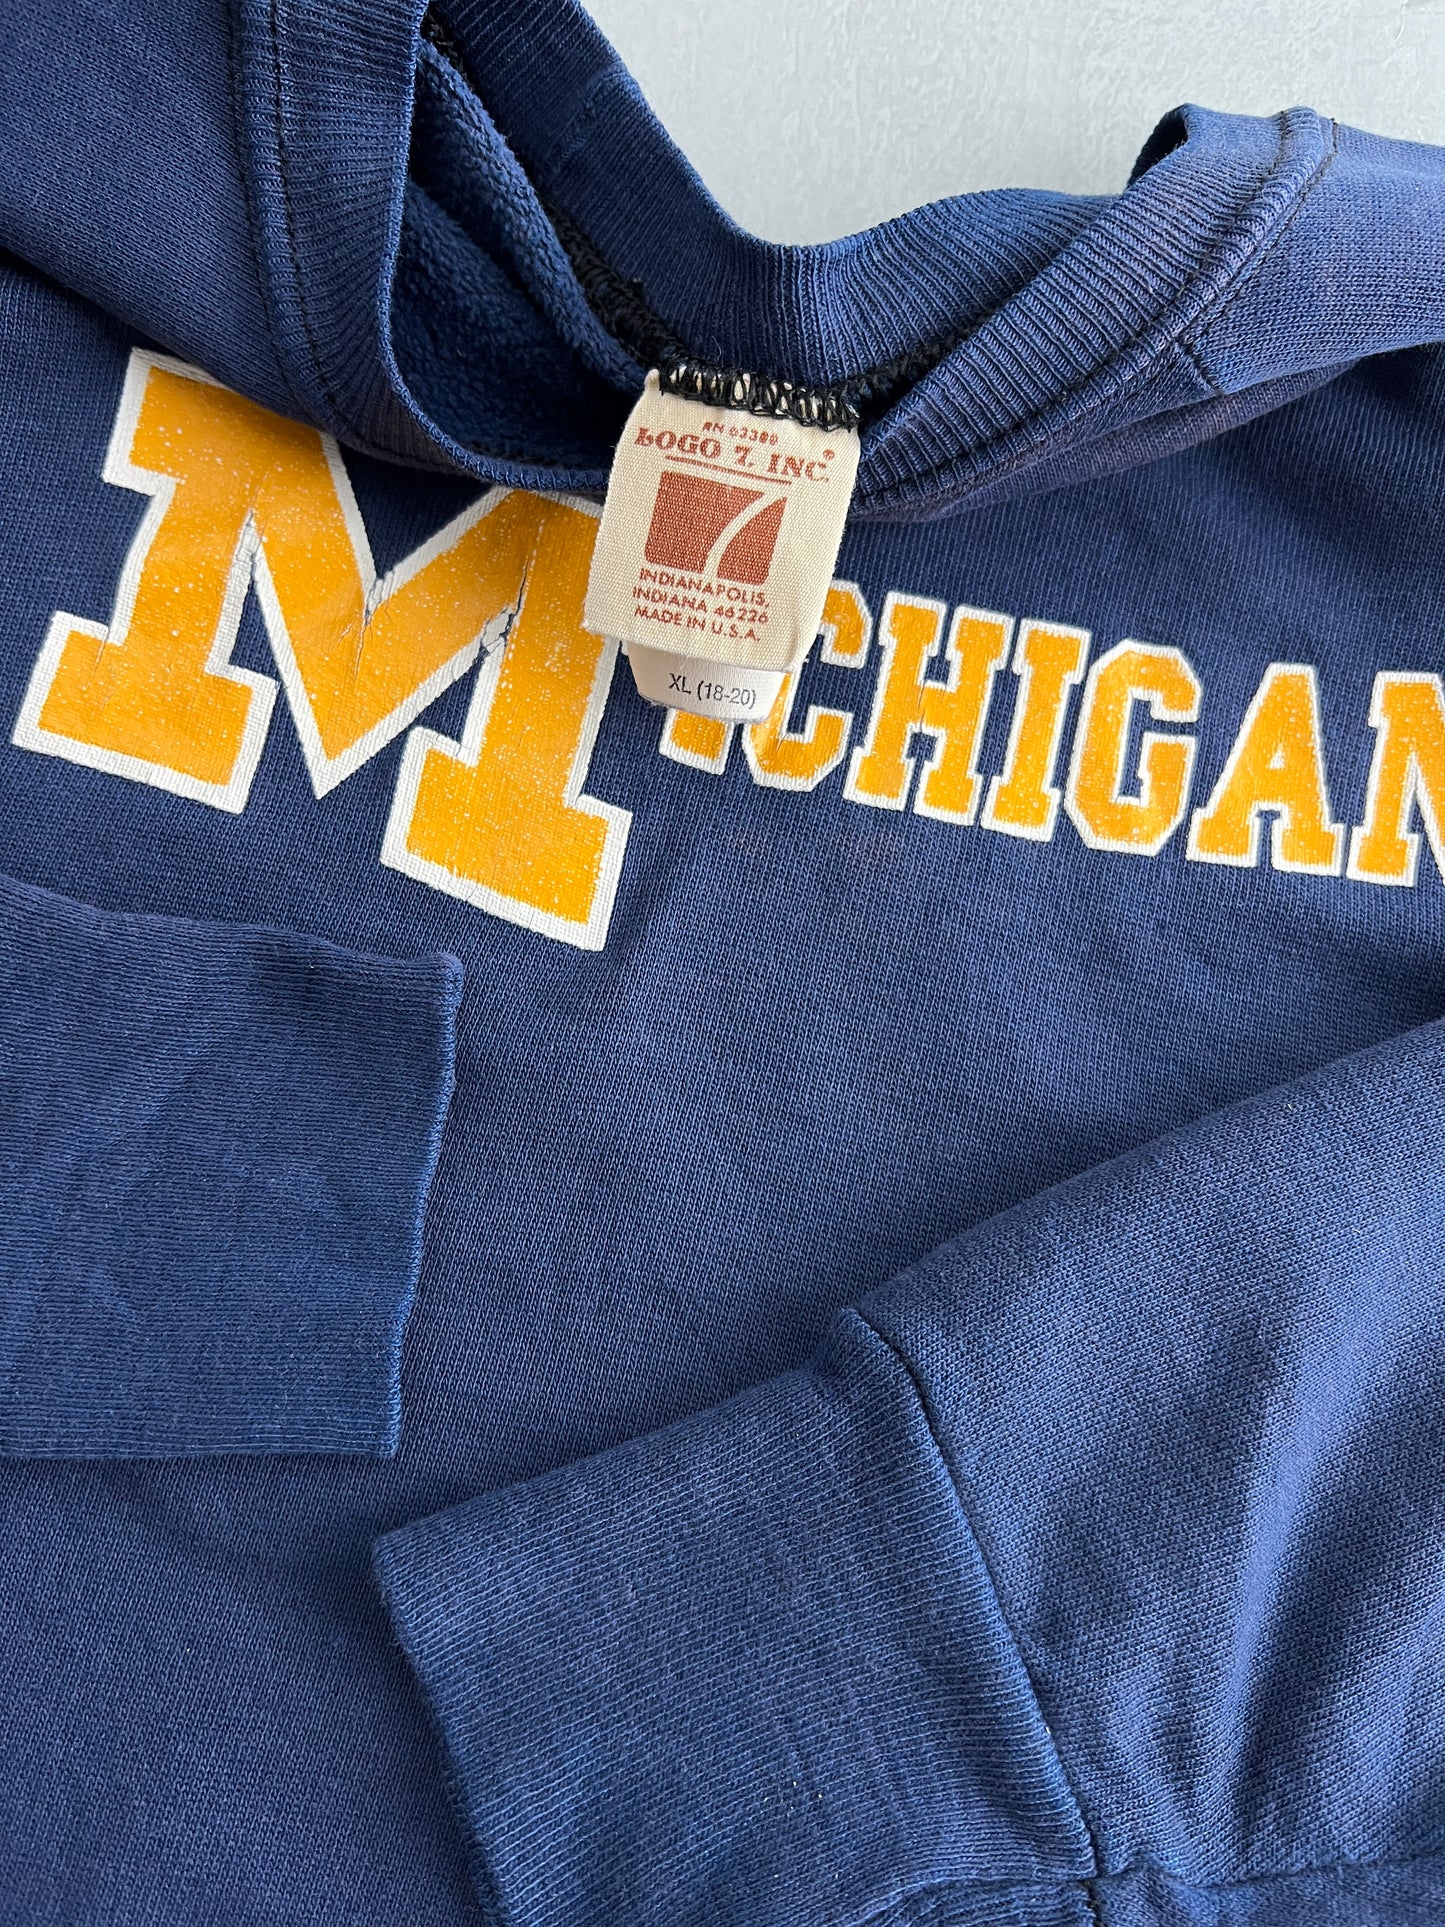 Faded 70's Michigan Sweatshirt [S/M]